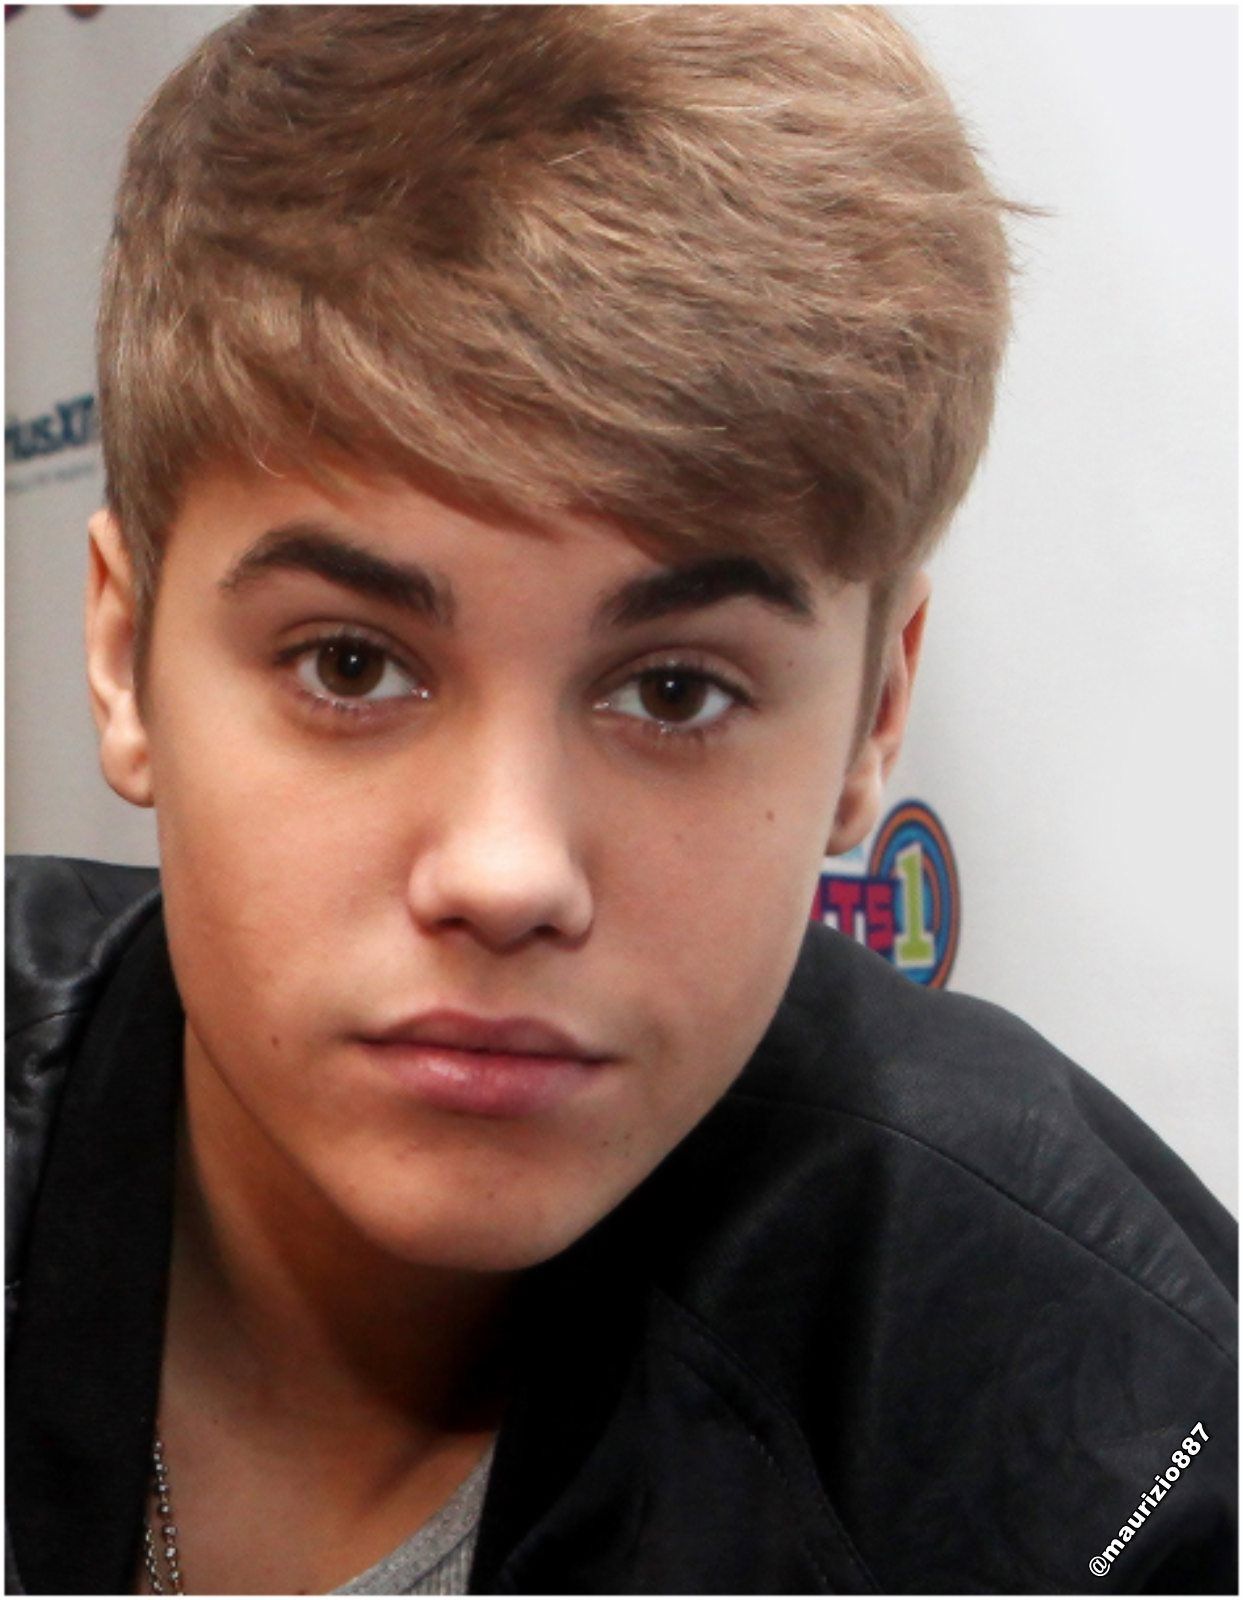 Cute Justin Bieber HD Wallpaper Image Do